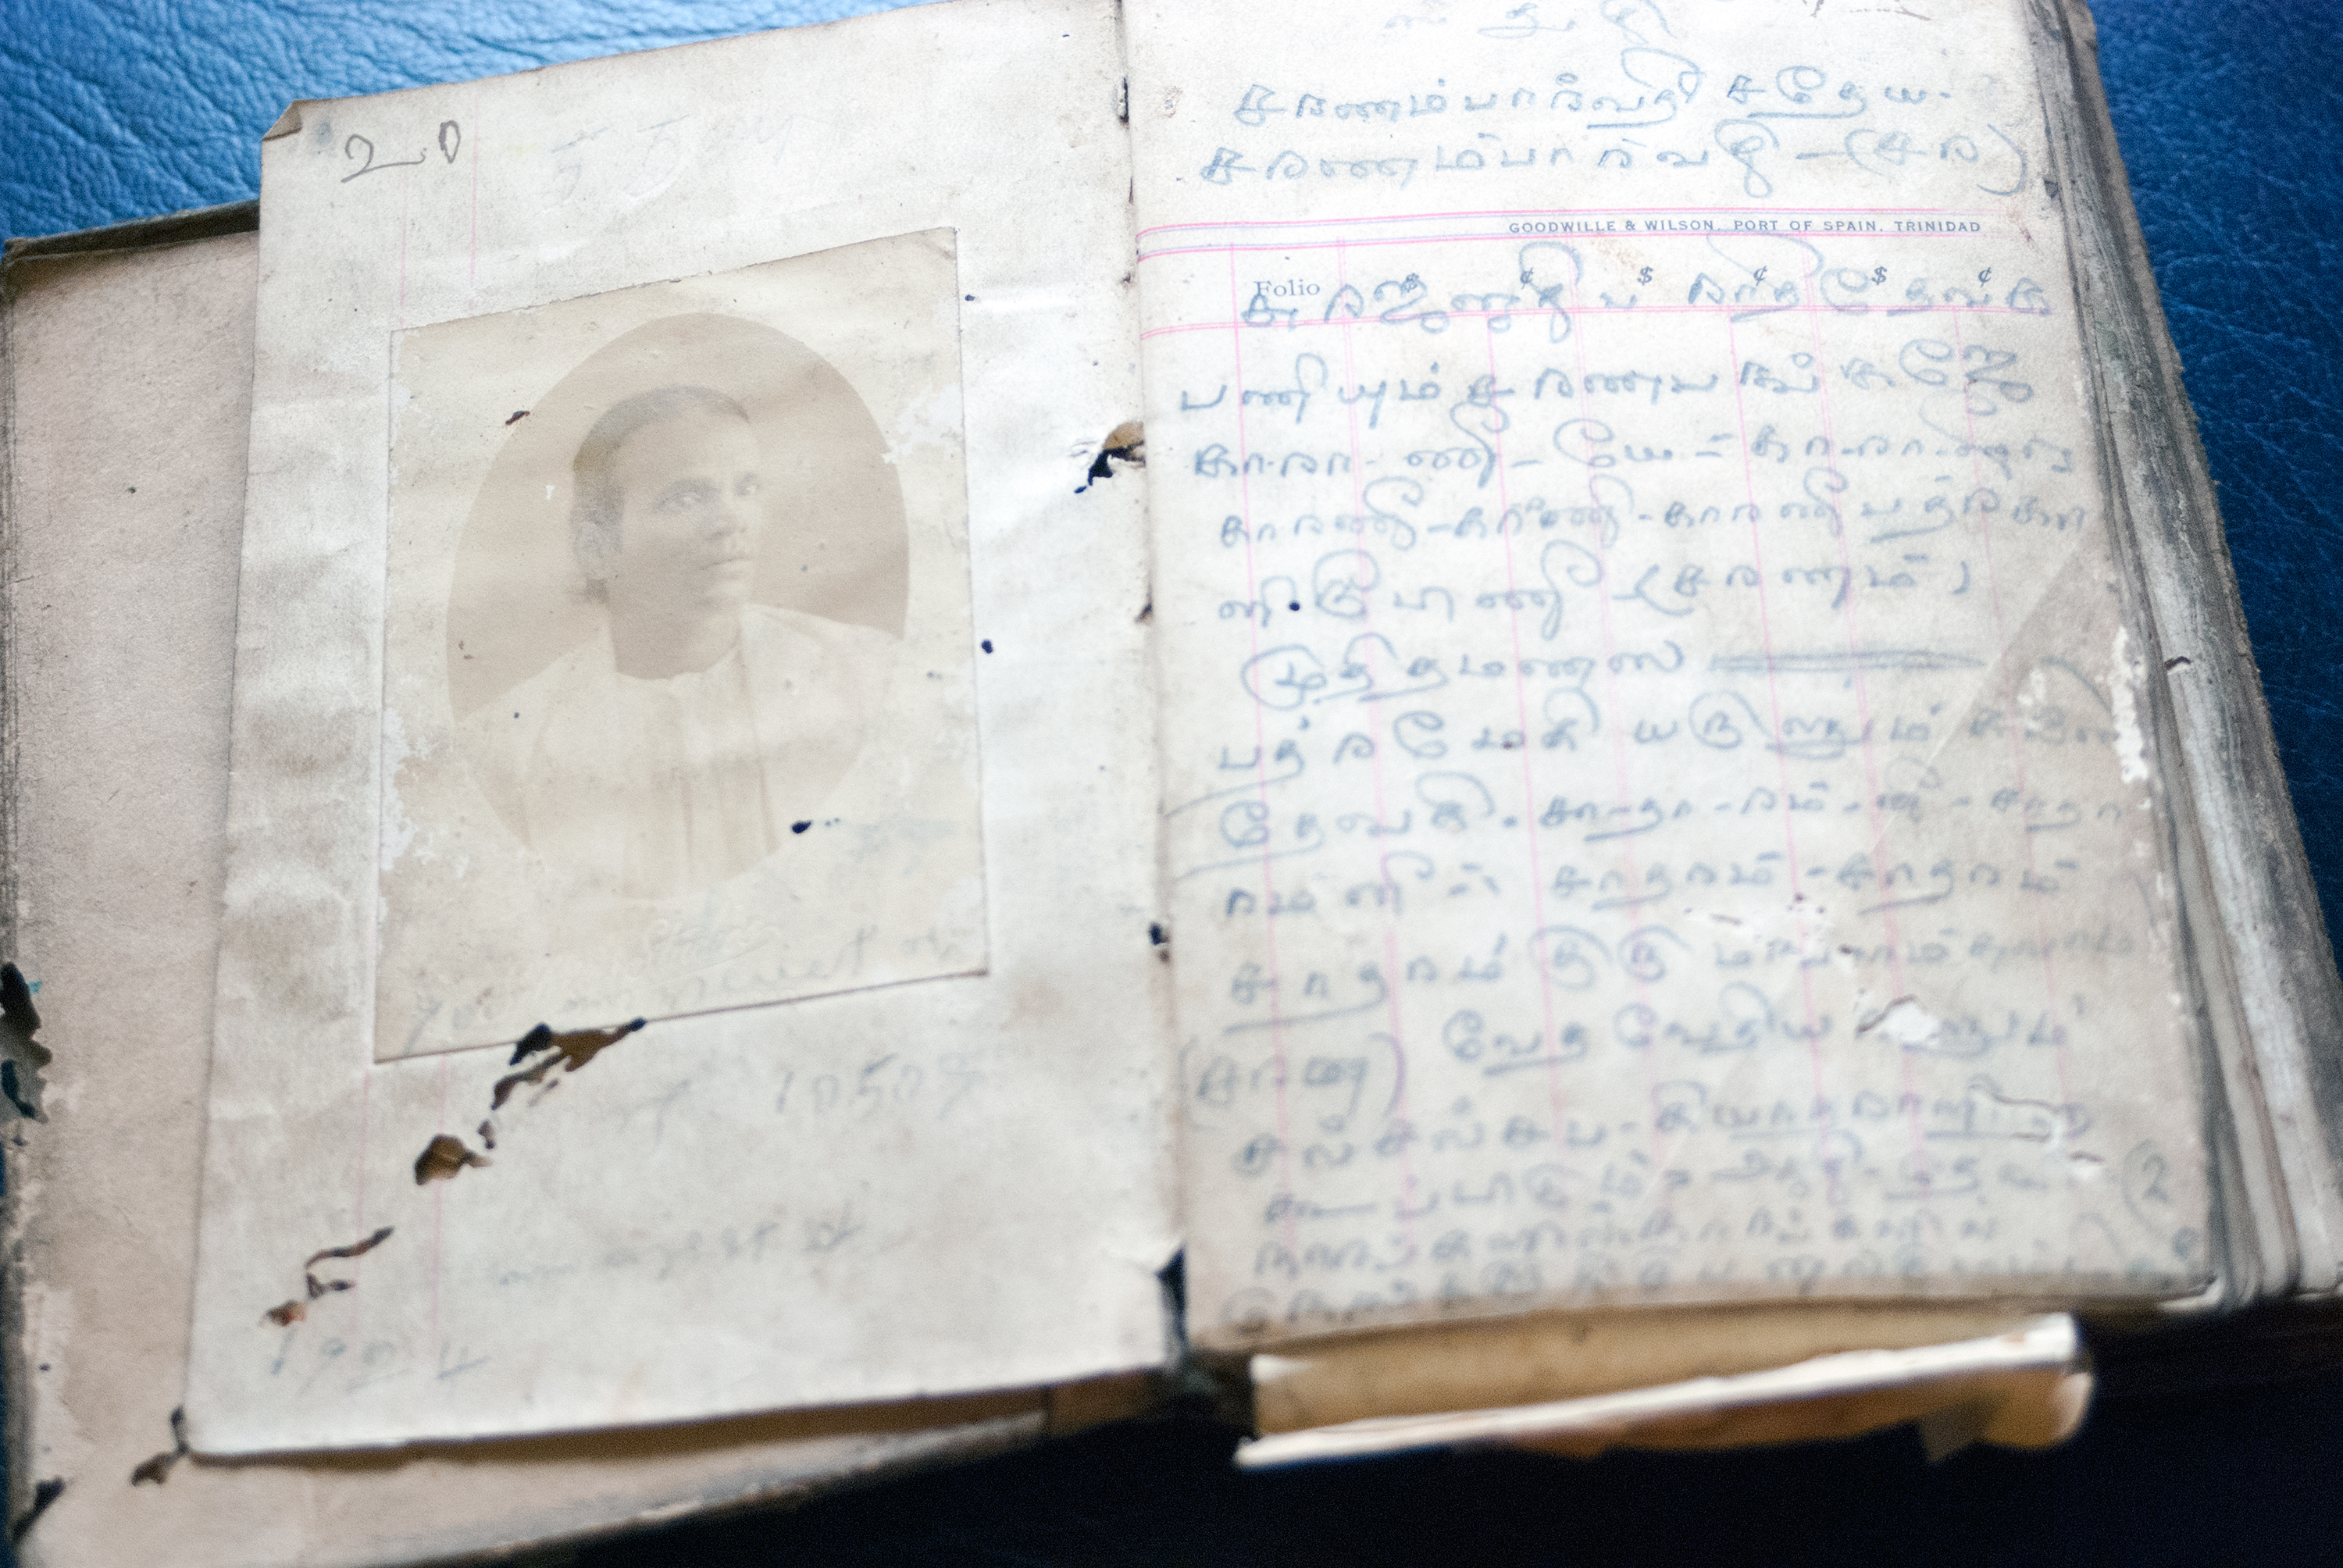 Roshini Kempadoo (2006) “Diary by Mrs. Procope's relative” Port-of-Spain, Trinidad